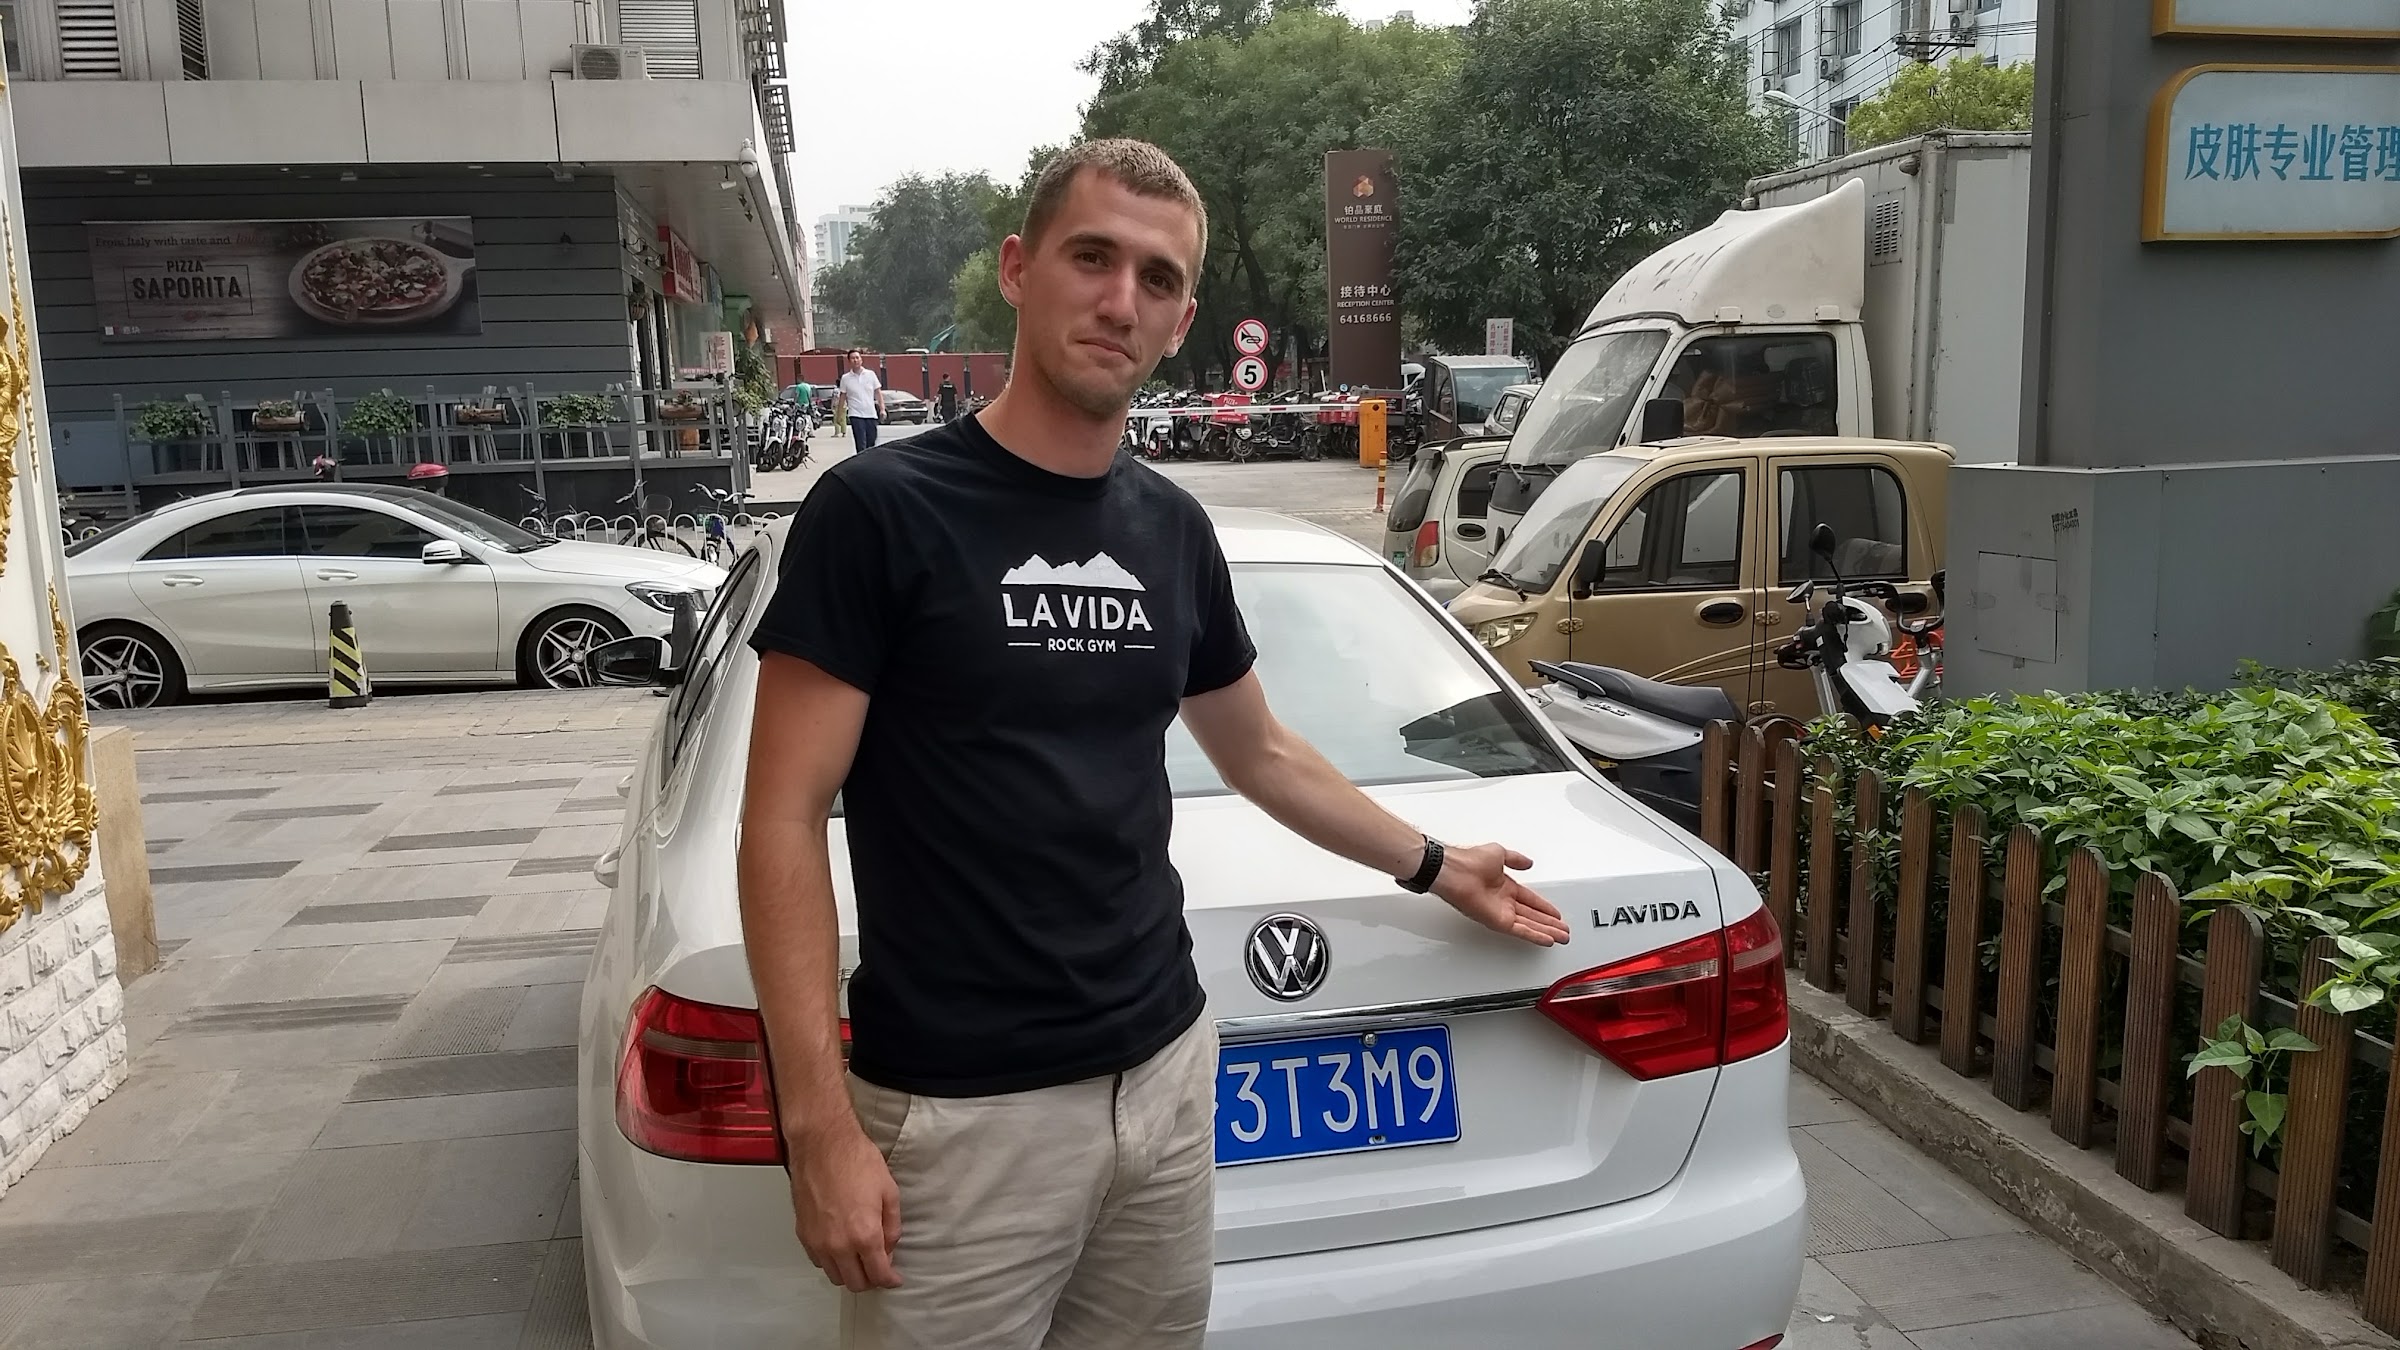 La Vida car in China